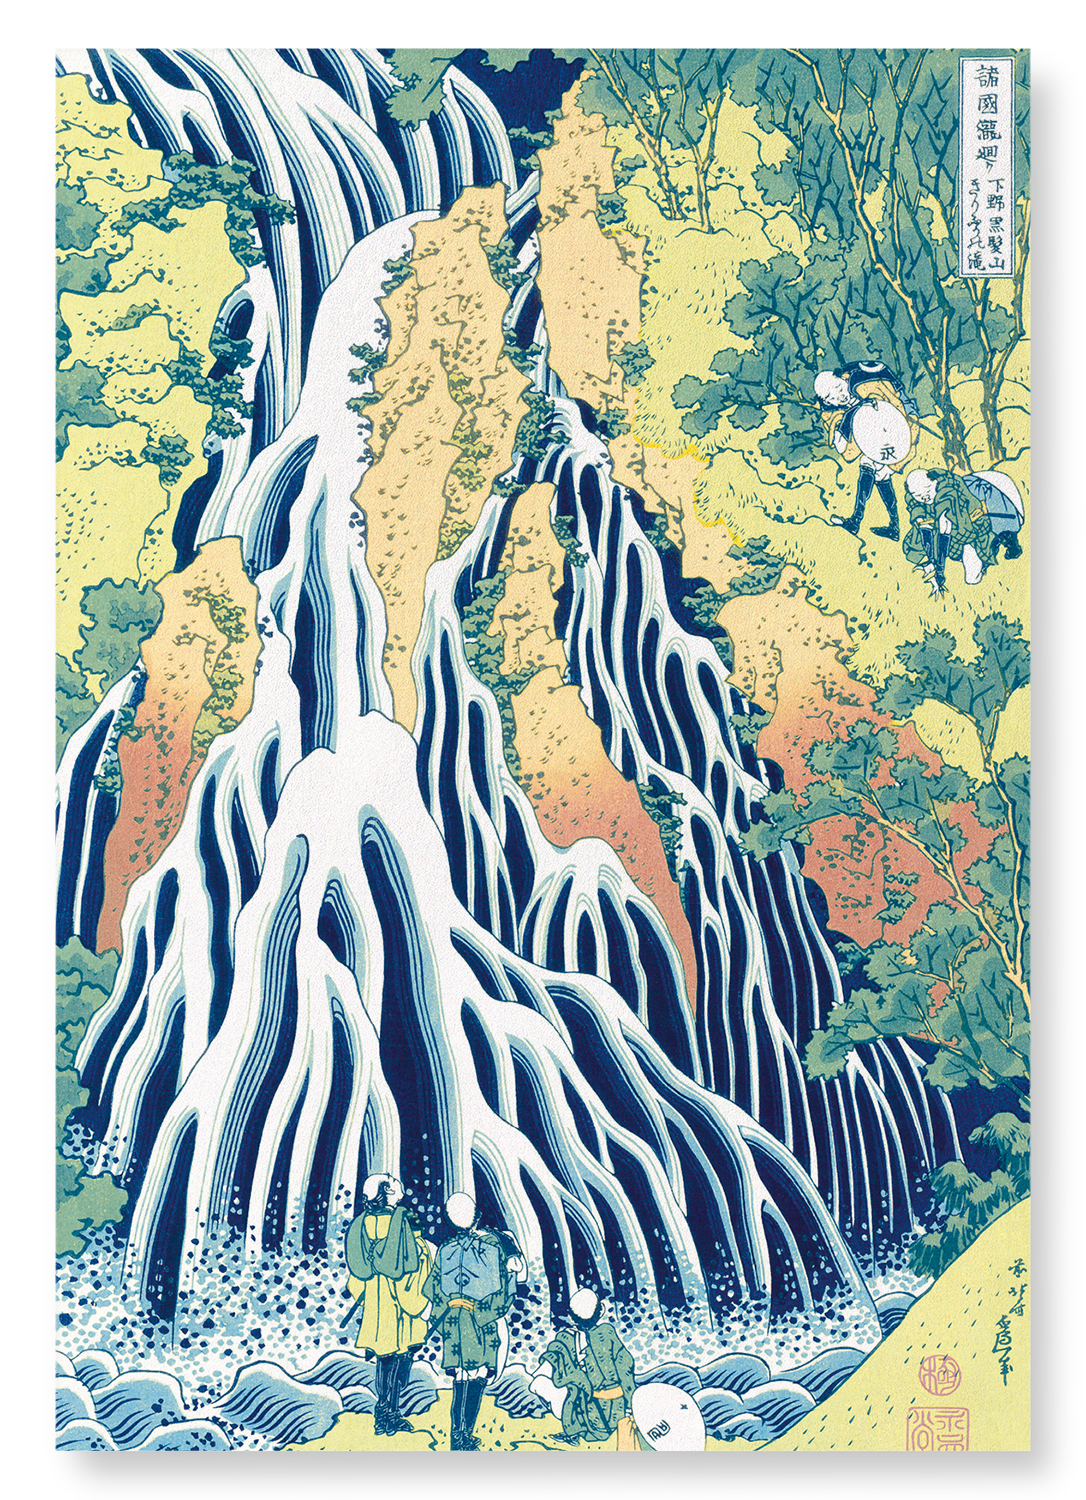 FALLING MIST WATERFALL: Japanese Art Print